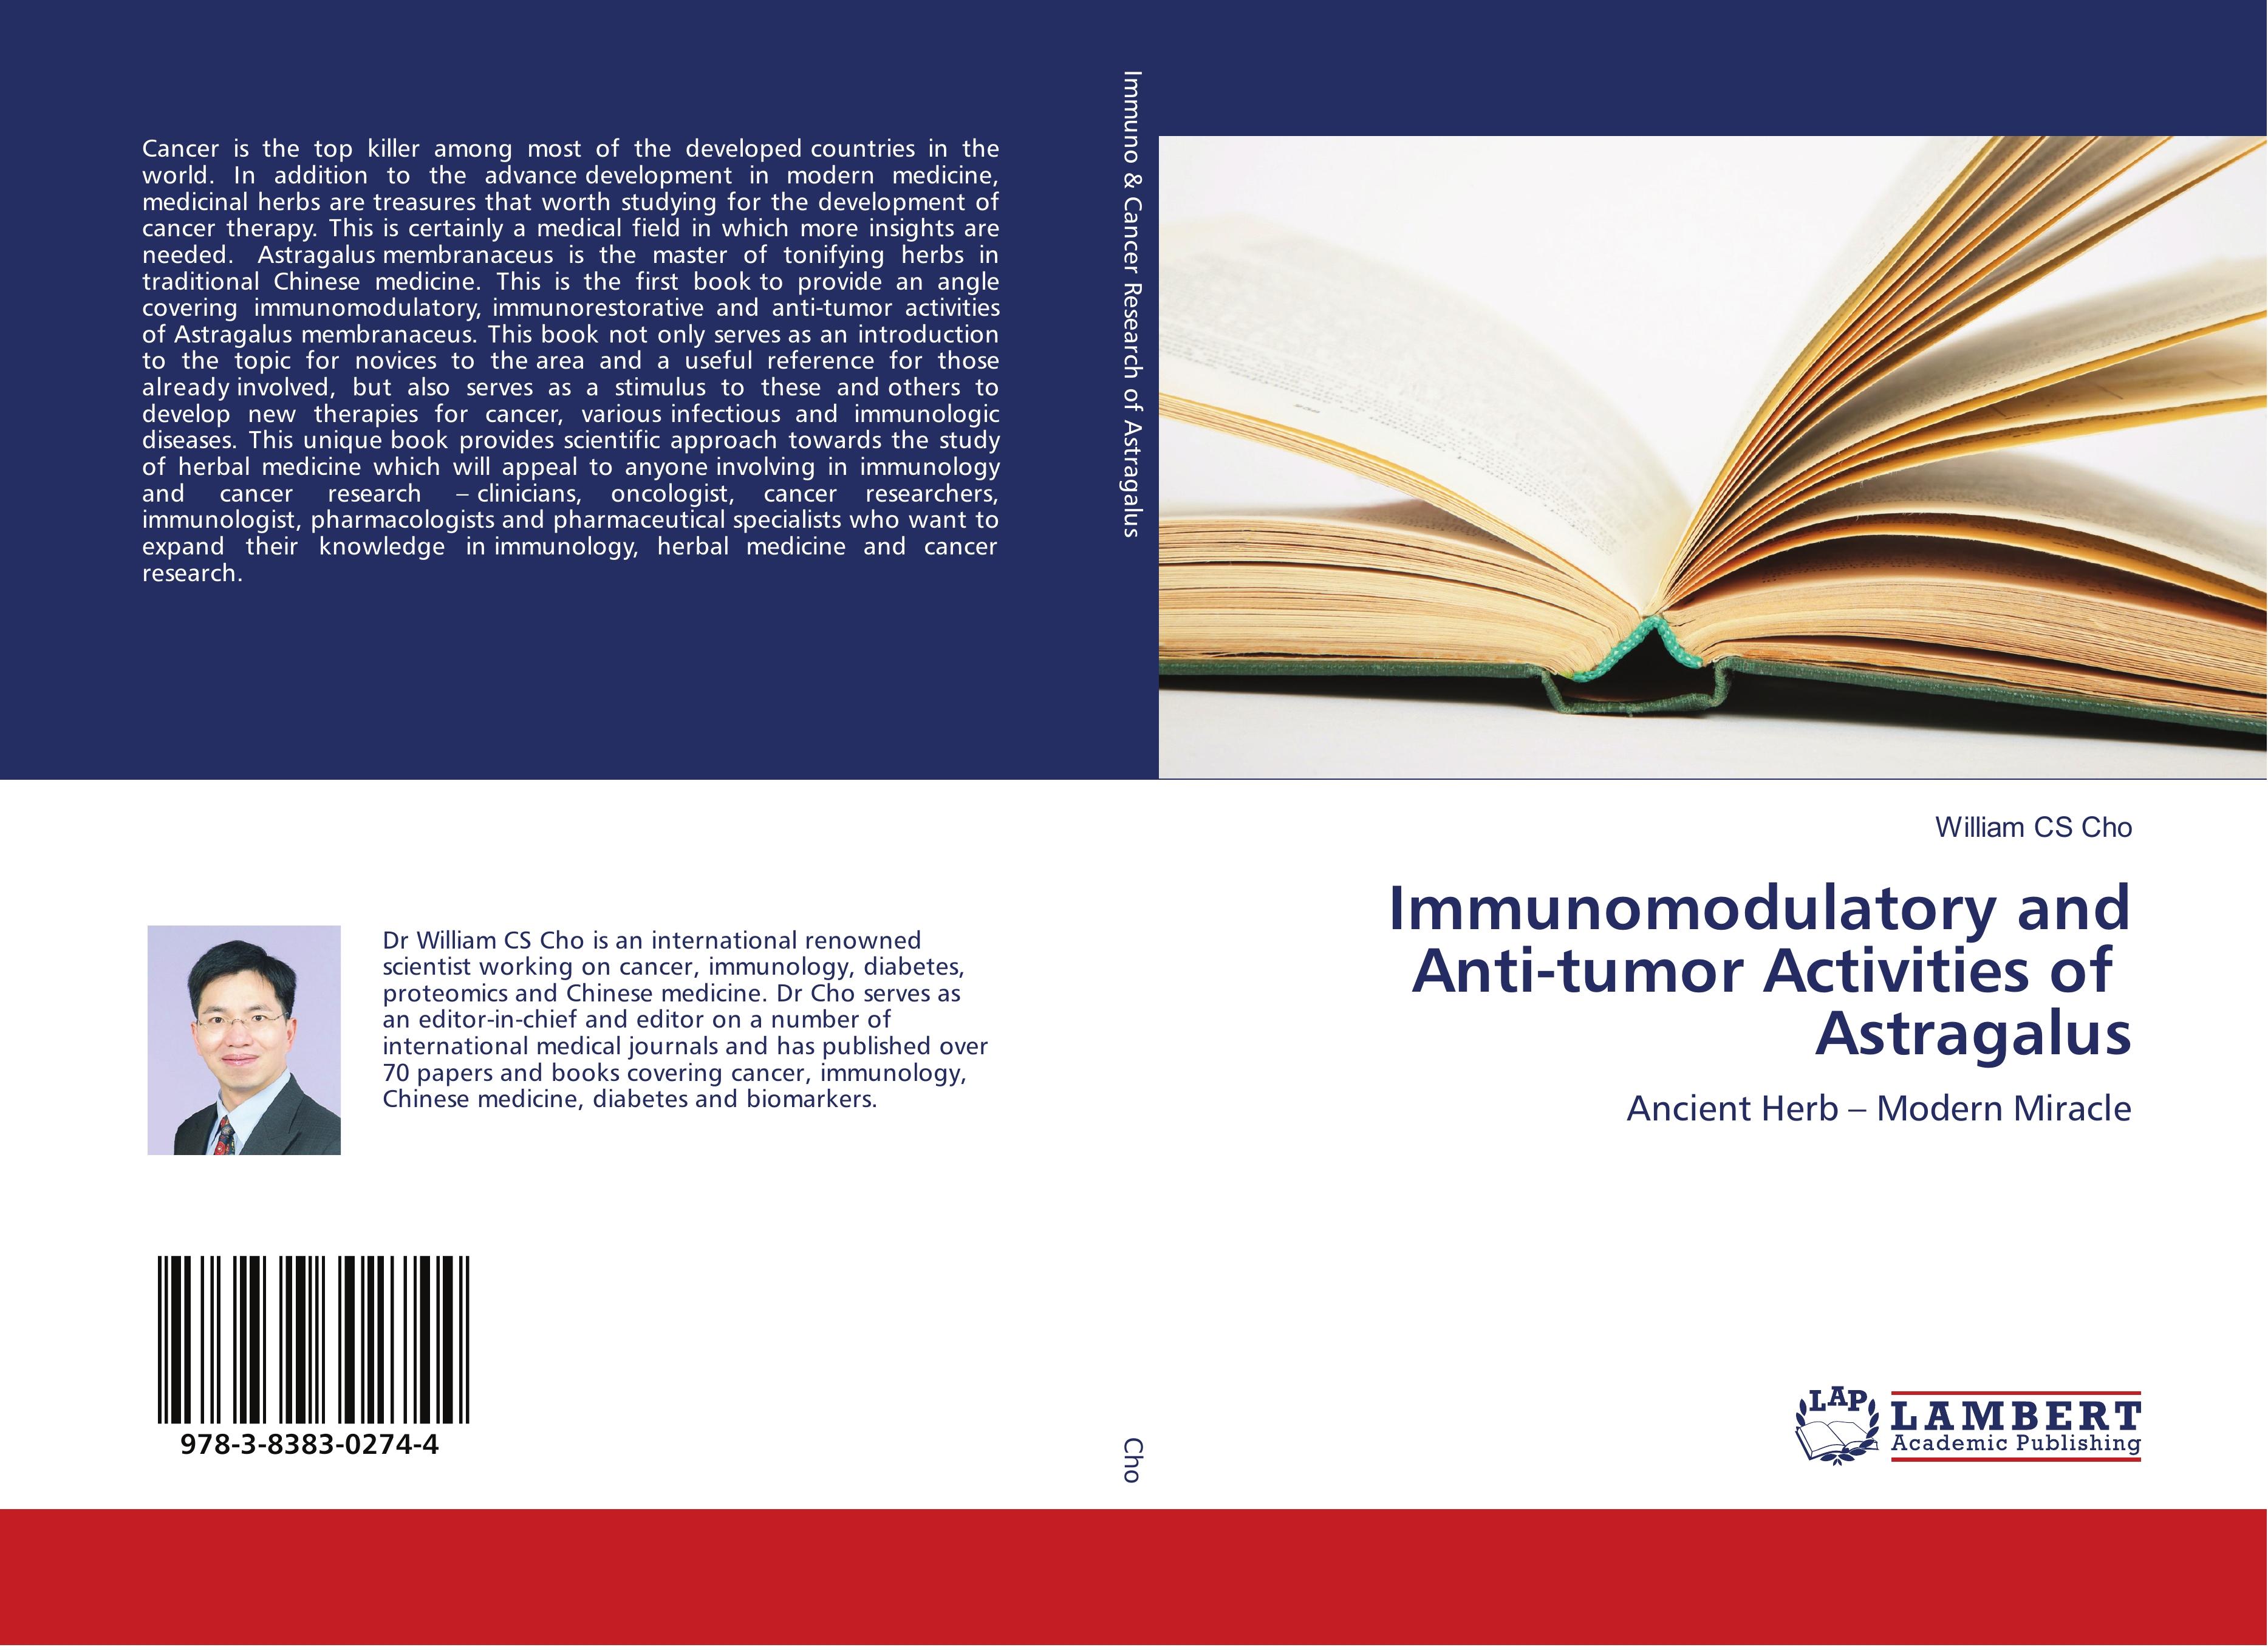 Immunomodulatory and Anti-tumor Activities of Astragalus - Cho, William CS